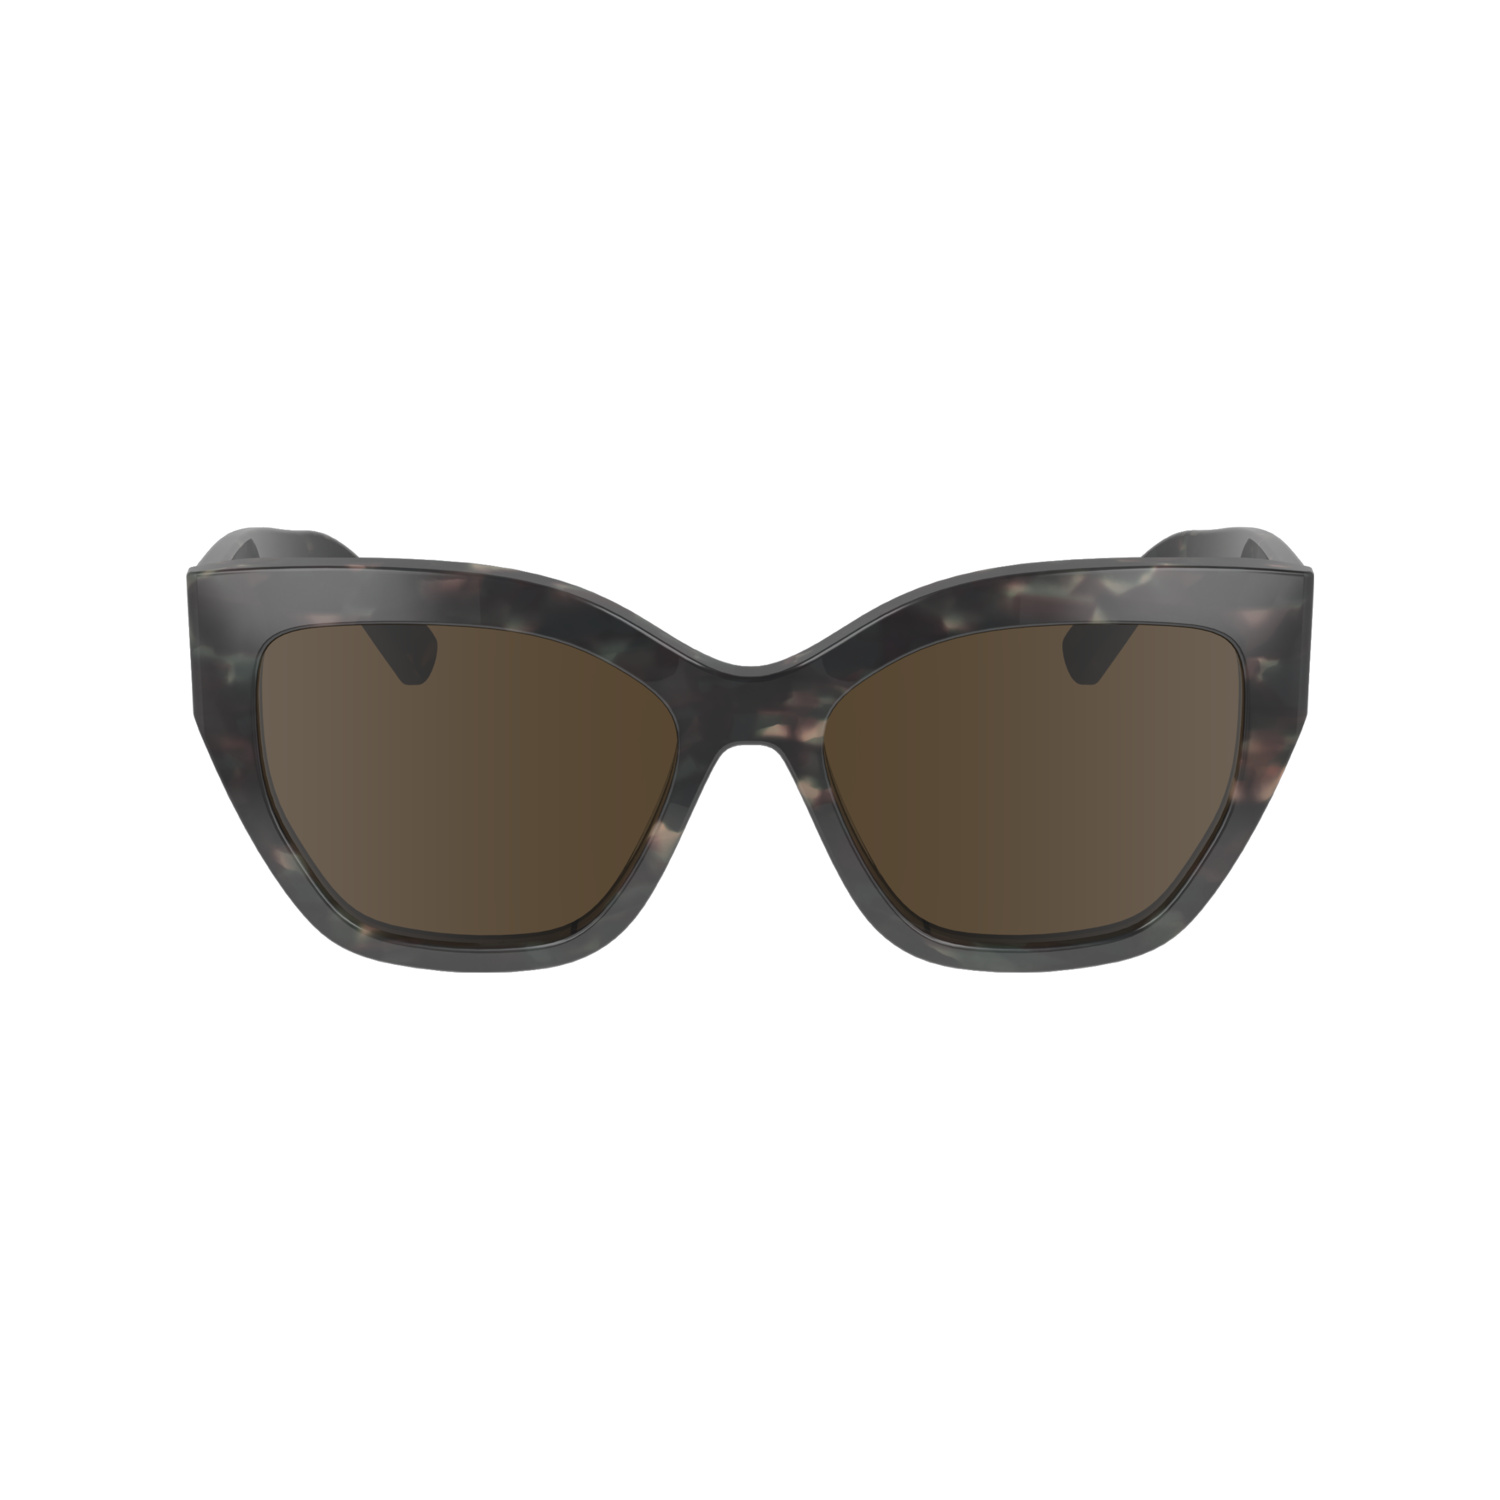 Longchamp Sunglasses In Black